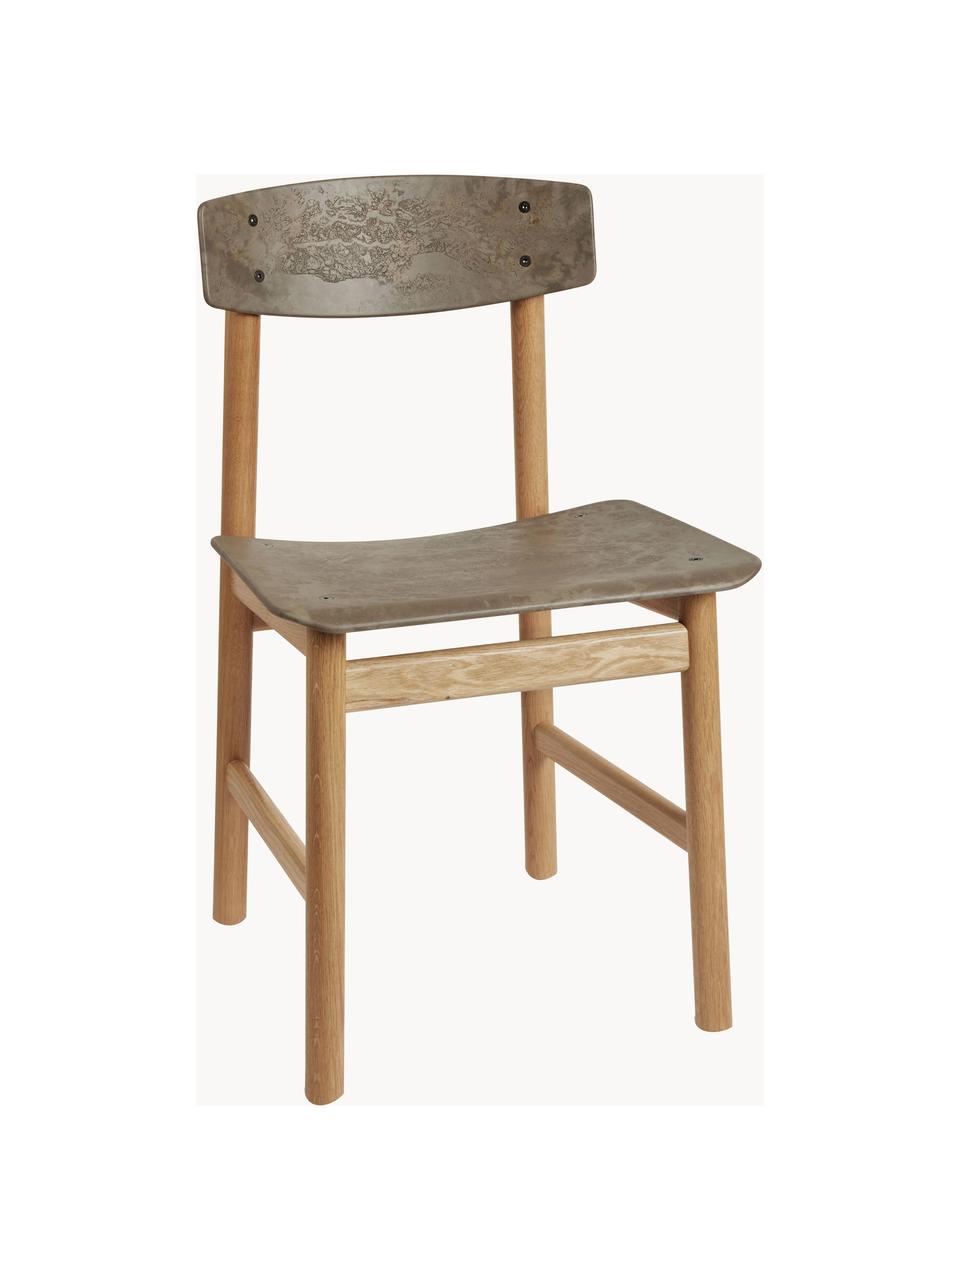 Handgemaakte houten stoel Consciouos, Frame: eikenhout, FSC-gecertific, Greige, licht eikenhout, B 47 x D 47 cm